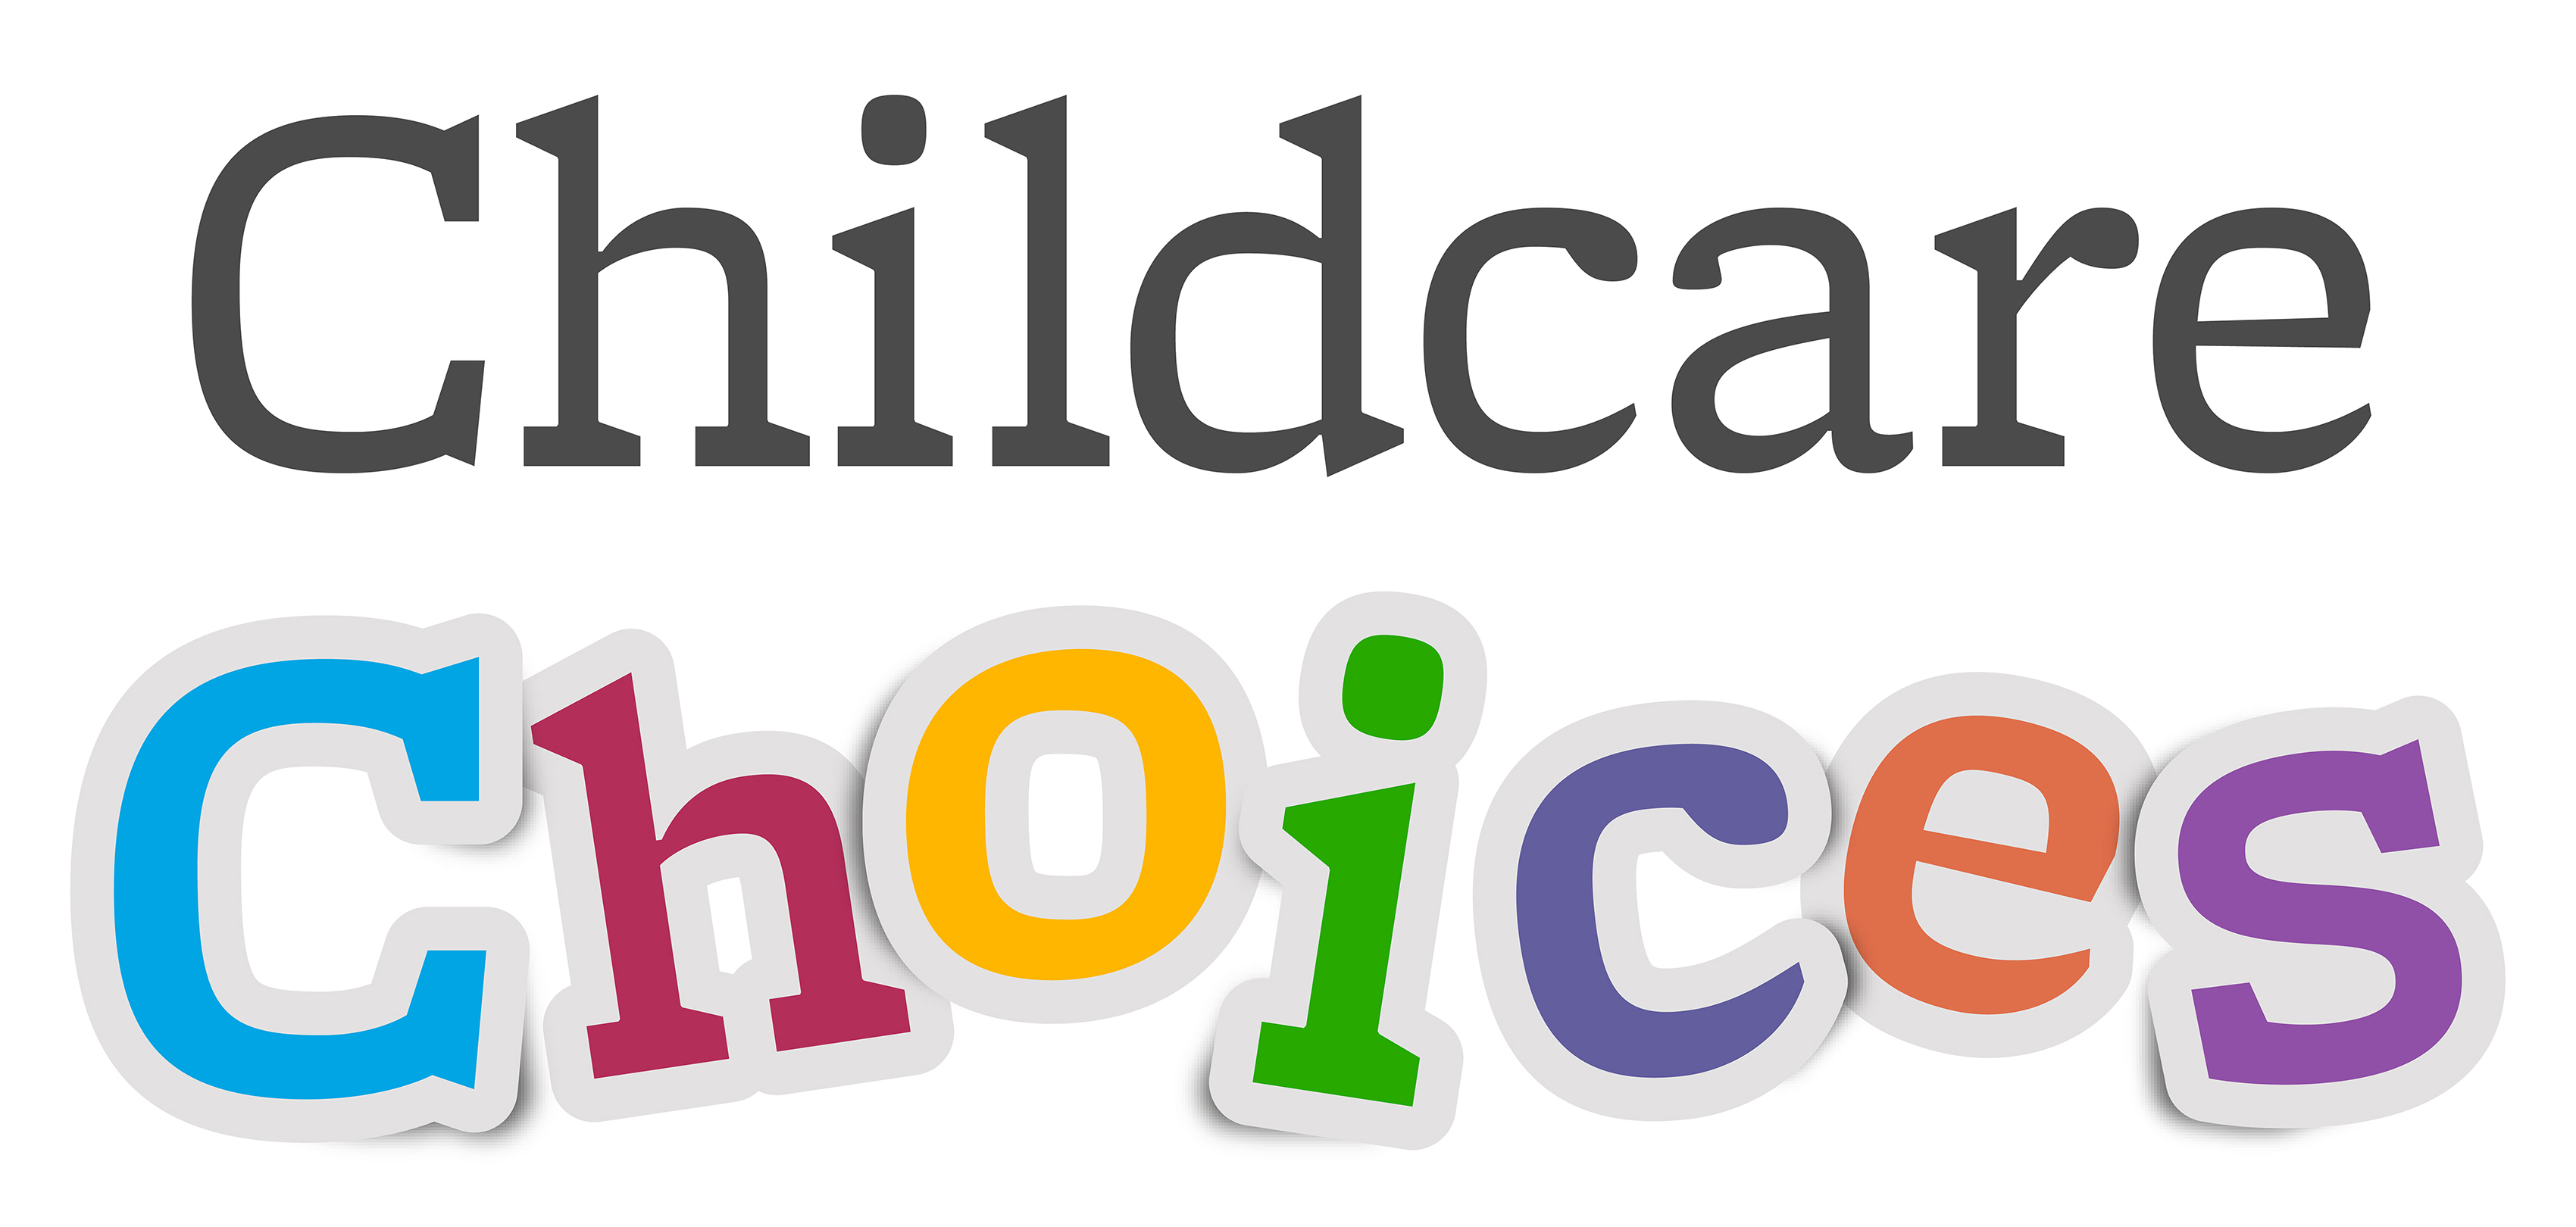 Childcare Choices logo